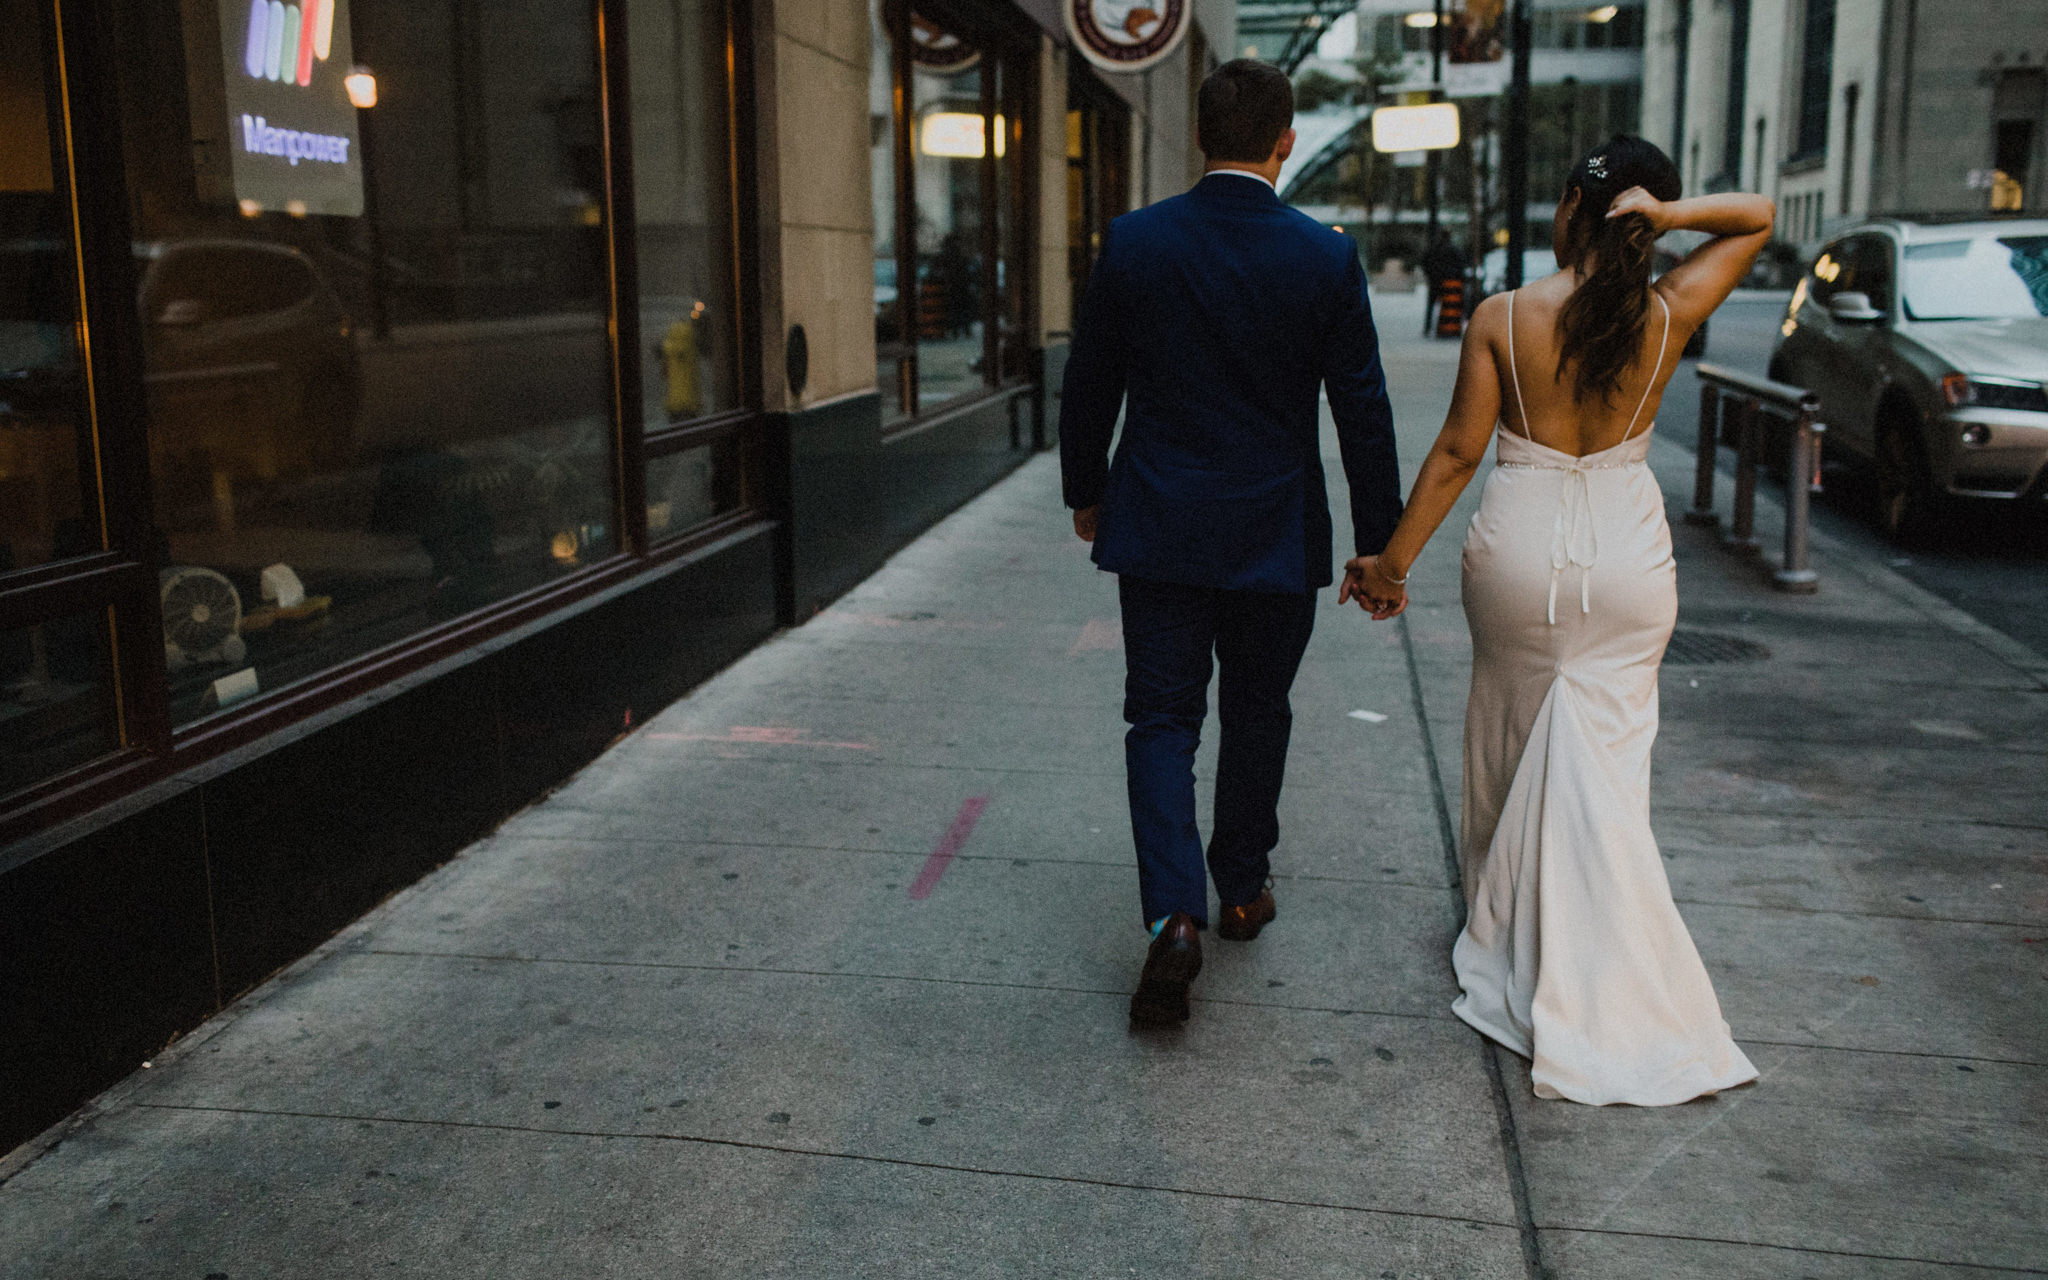 bride and groom walking downtown